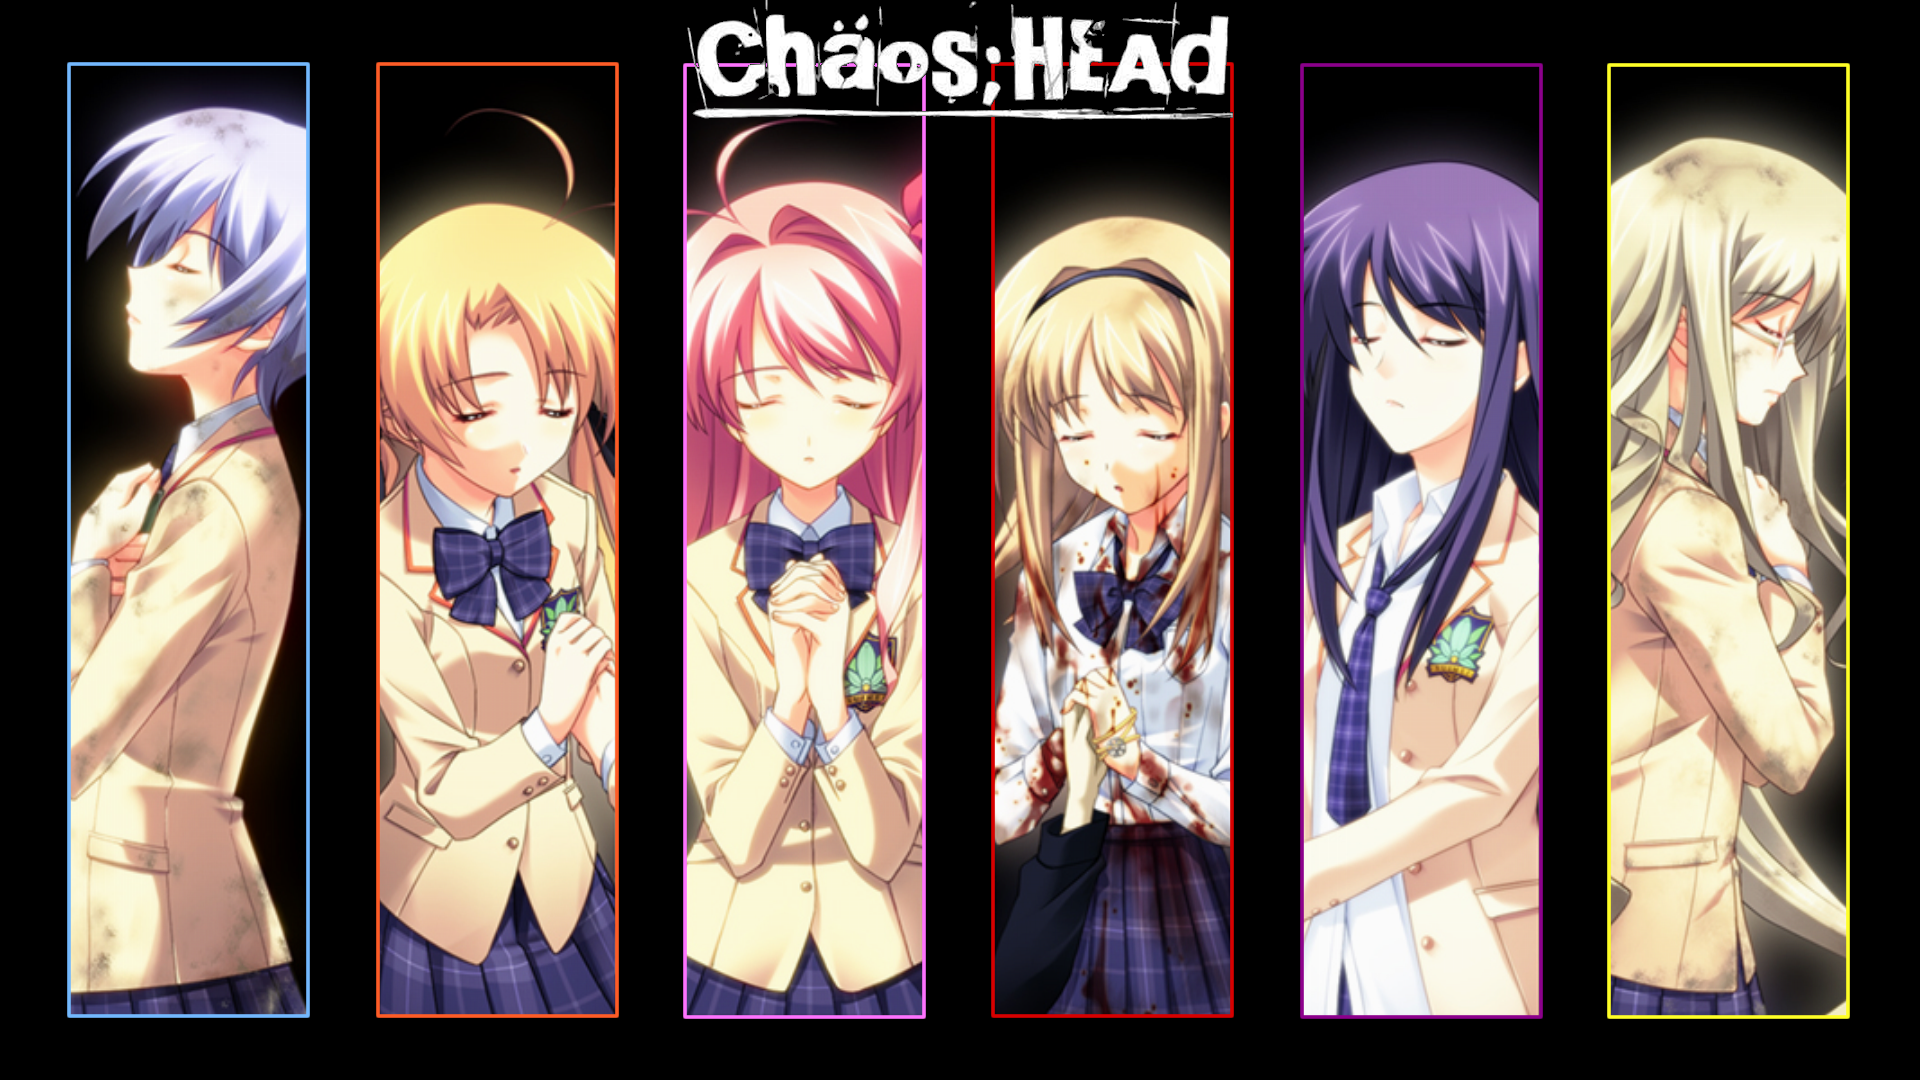 Chaos Head Wallpapers by Treesie on DeviantArt